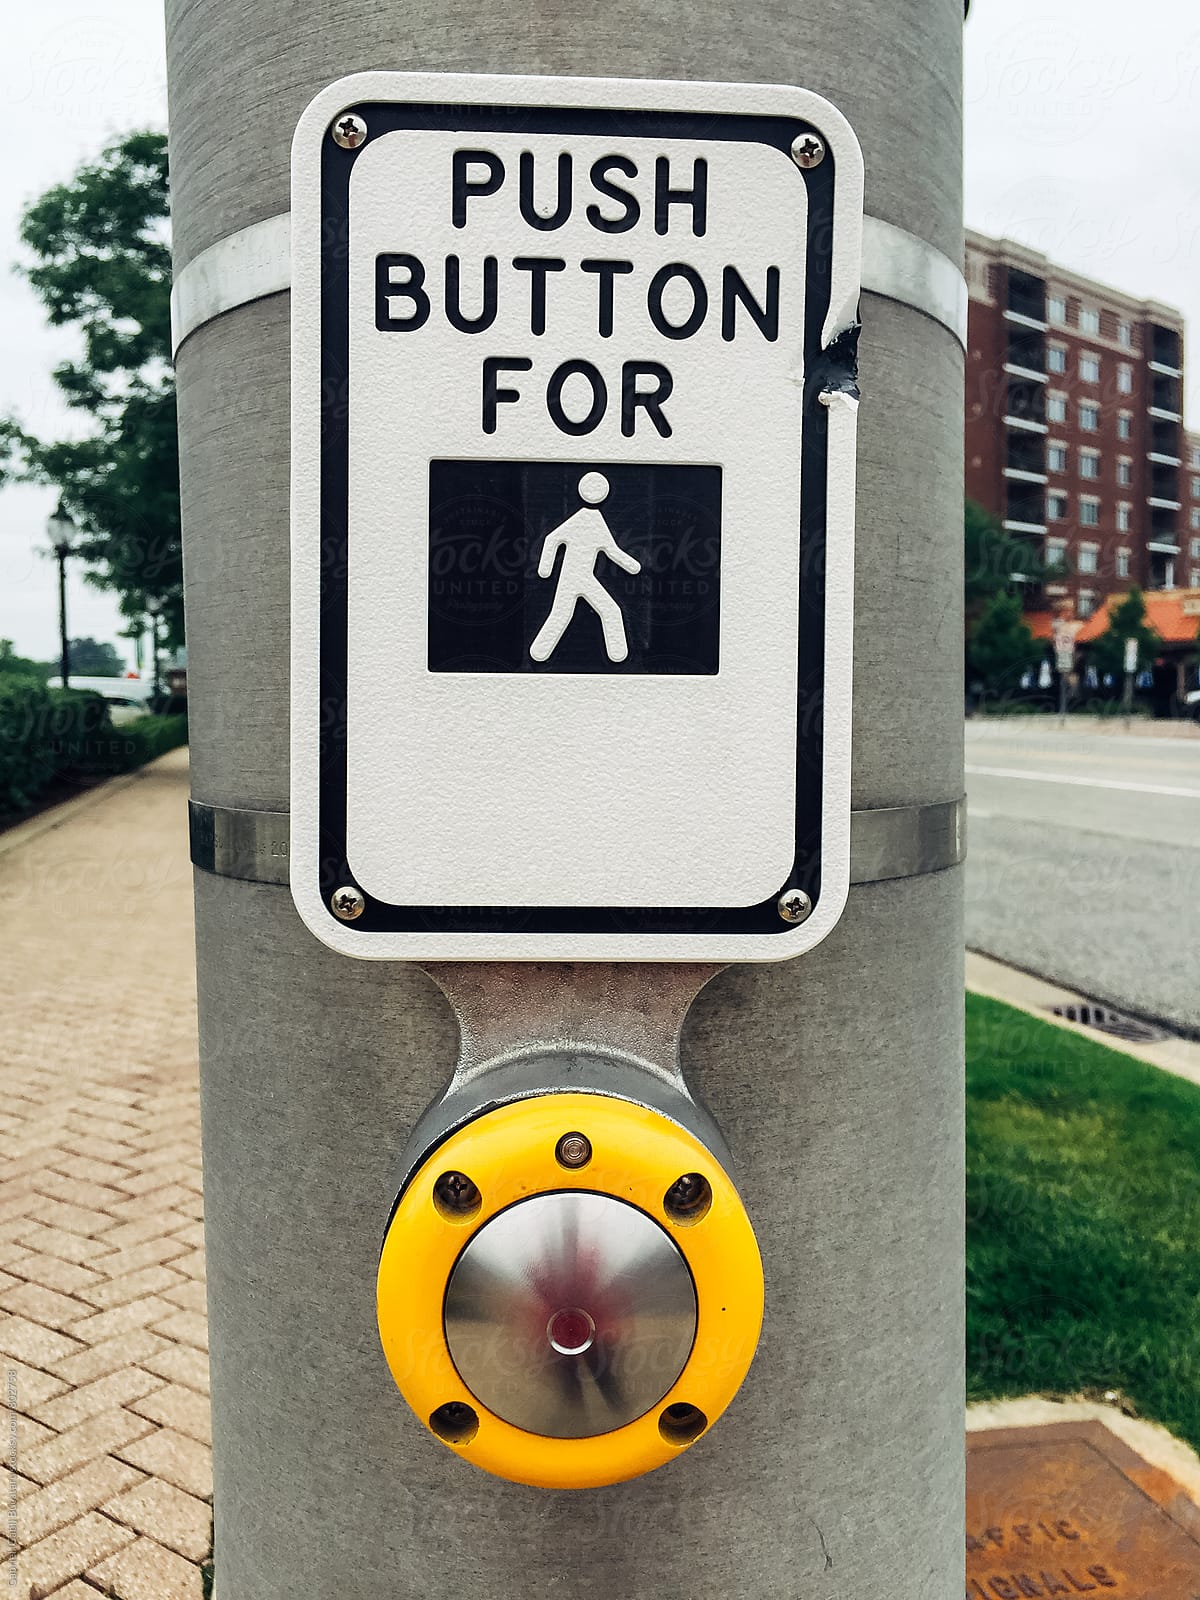 the pedestrian switch